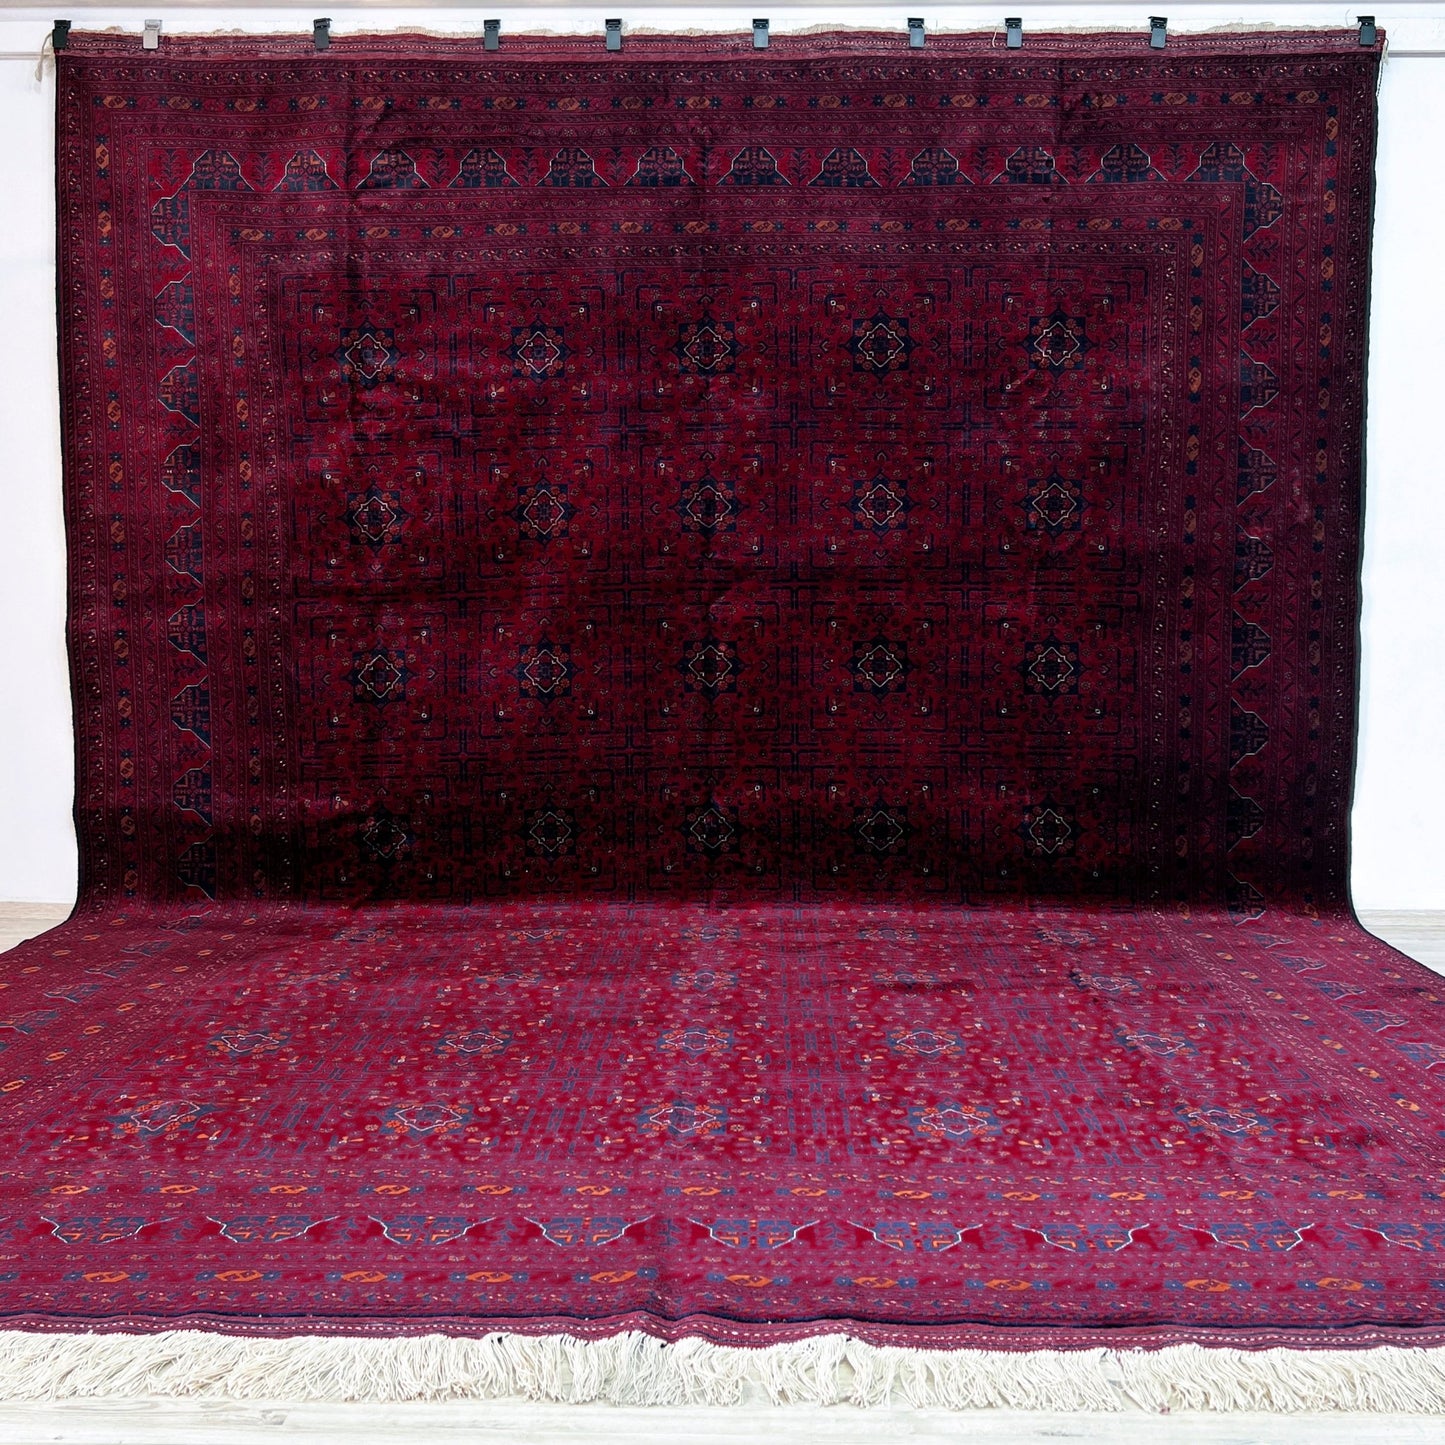 Large turkmen bilicik rug burgundy red navy blue oriental rug shop palo alto berkeley rug shopping san francisco bay area buy